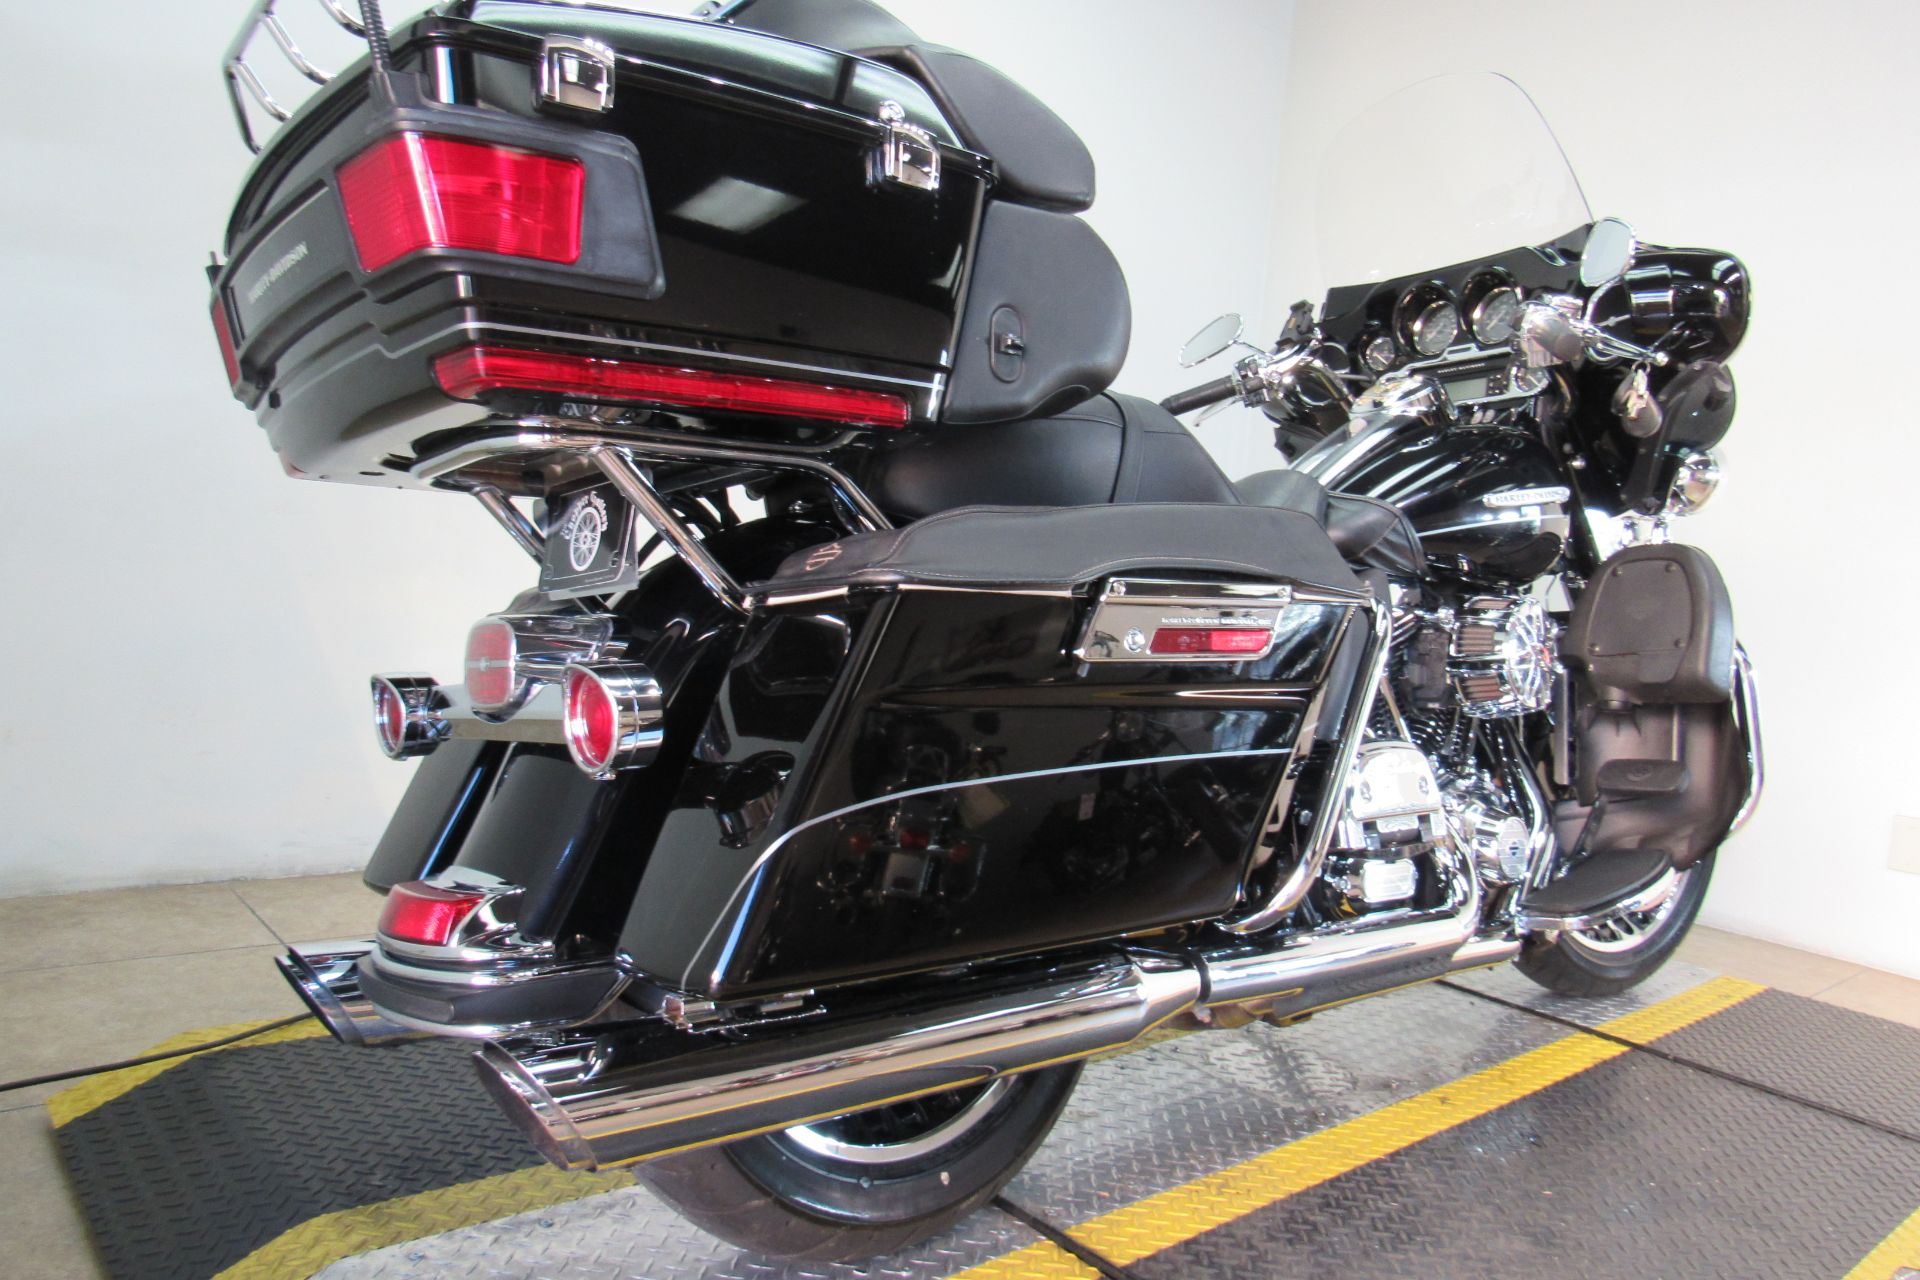 2011 Harley-Davidson Electra Glide® Ultra Limited in Temecula, California - Photo 35